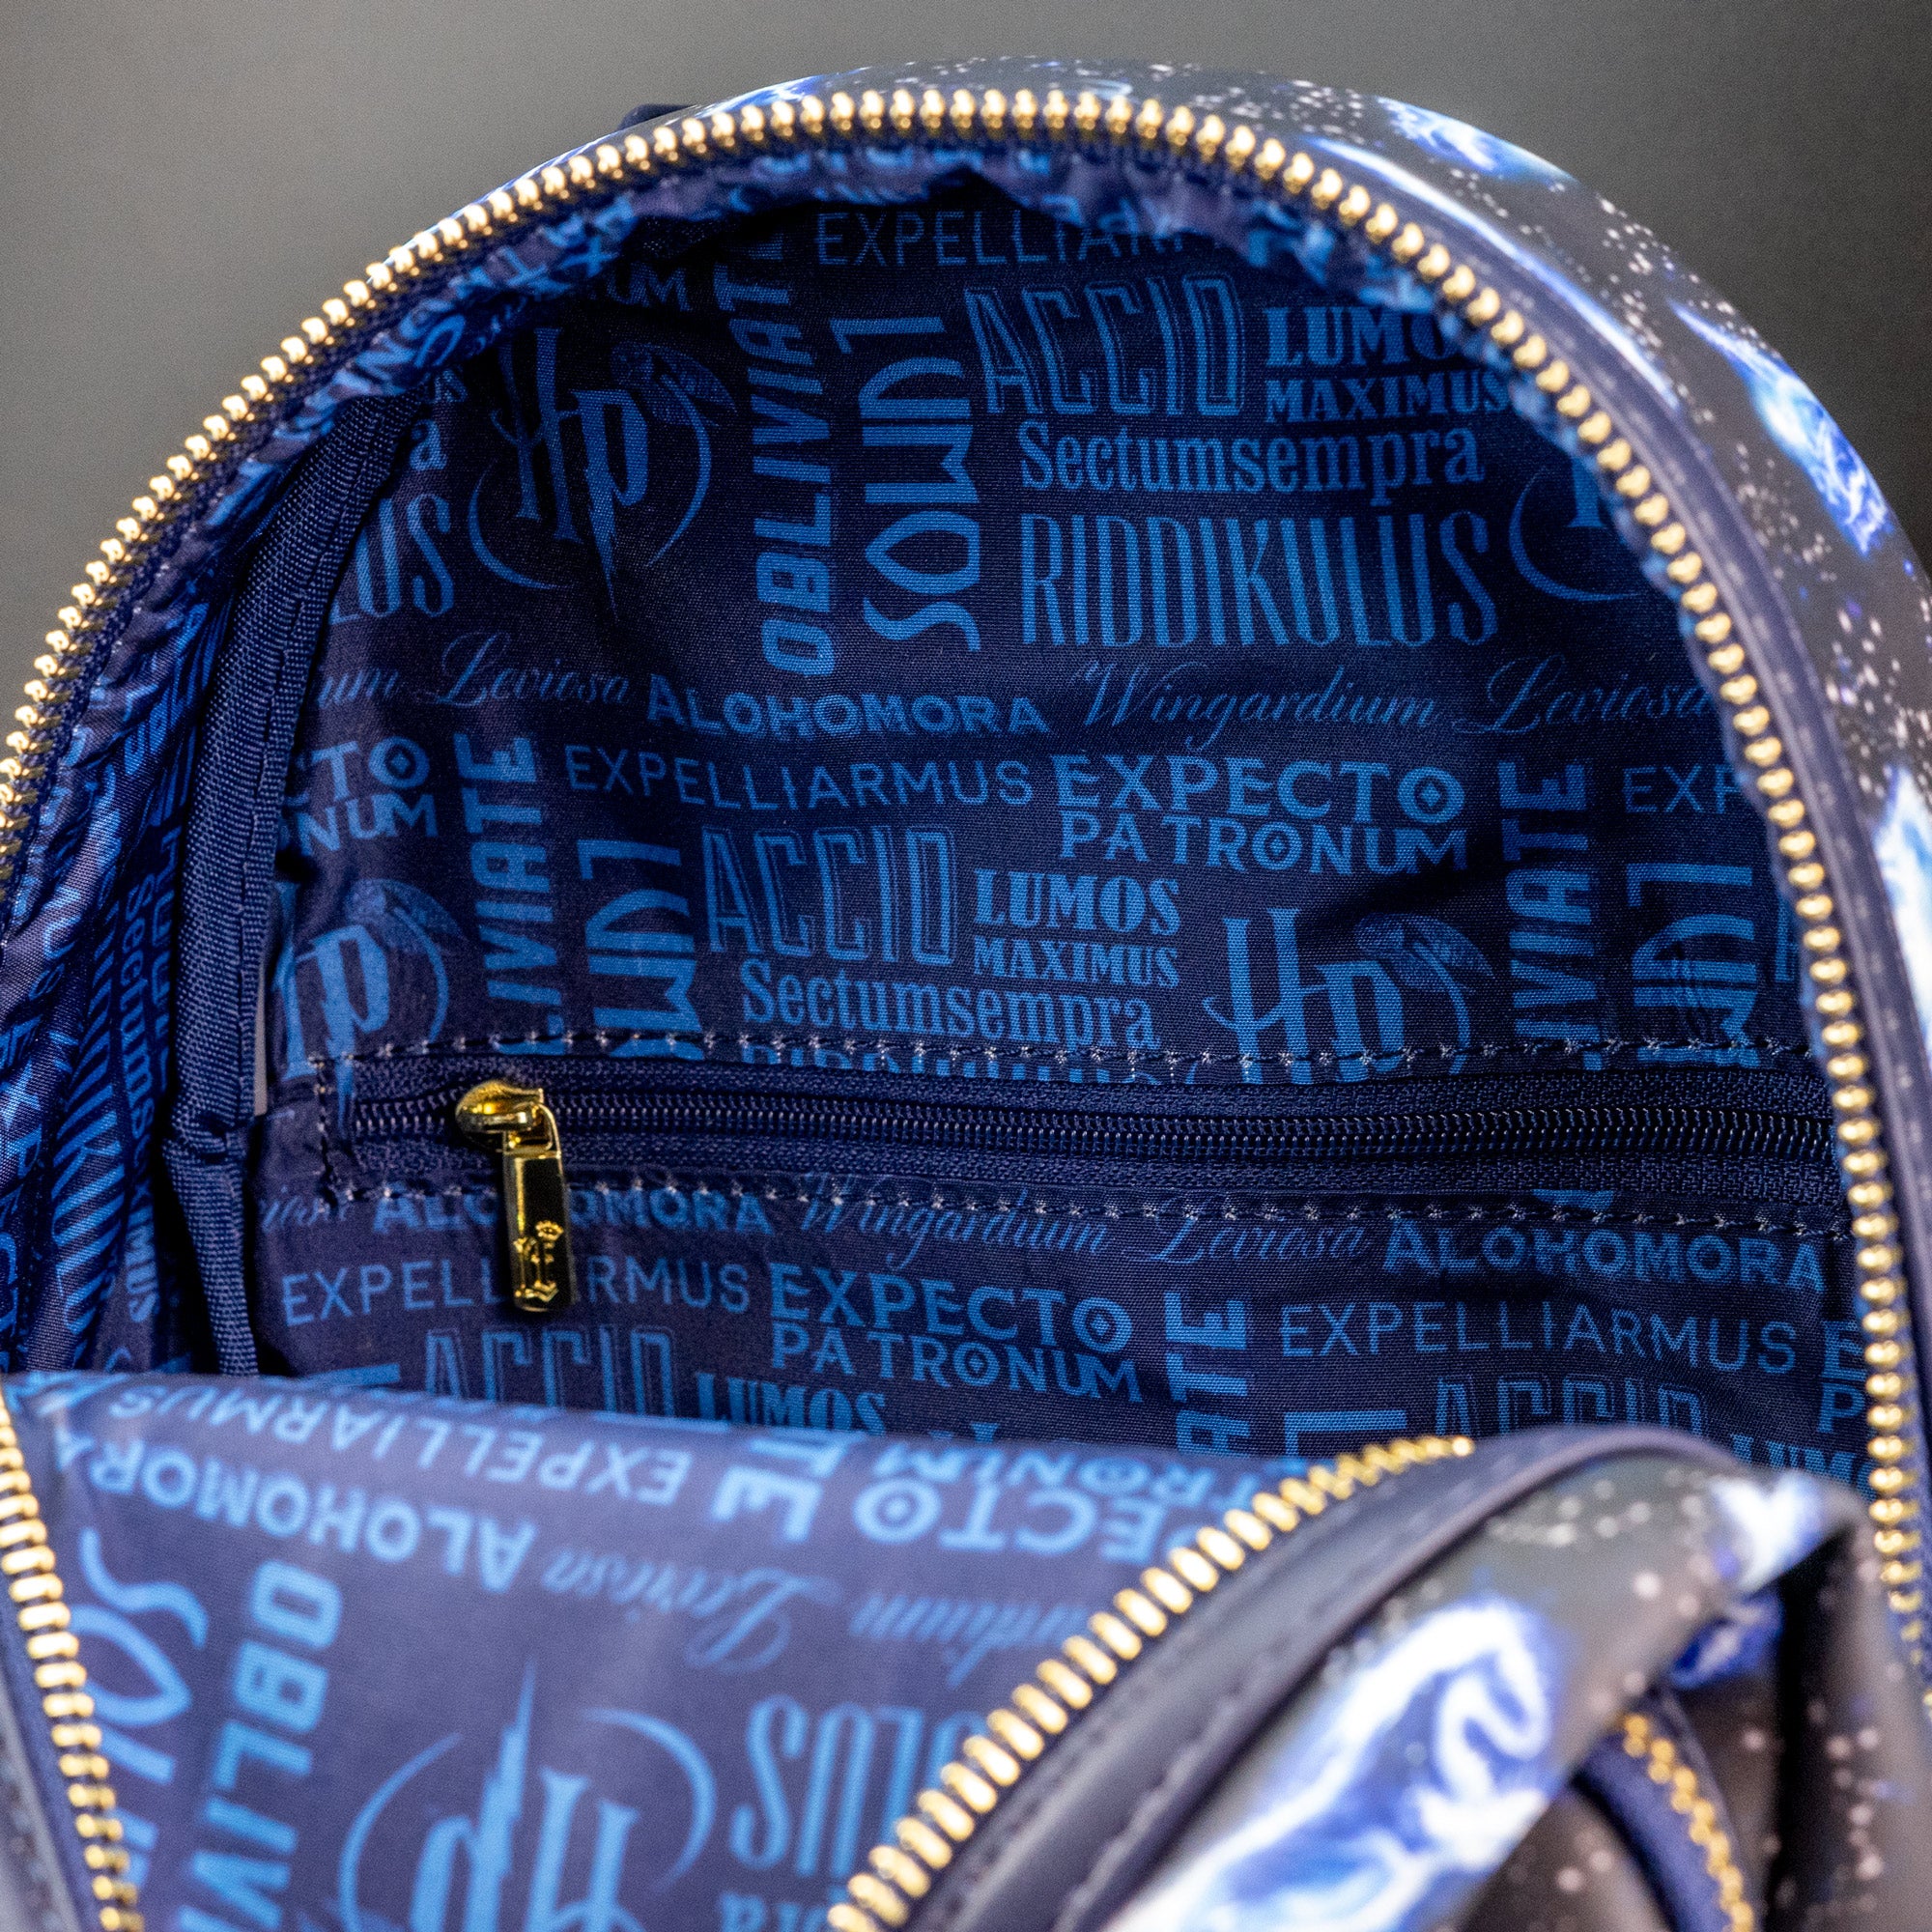 Loungefly x Harry Potter Patronus Print Mini Backpack